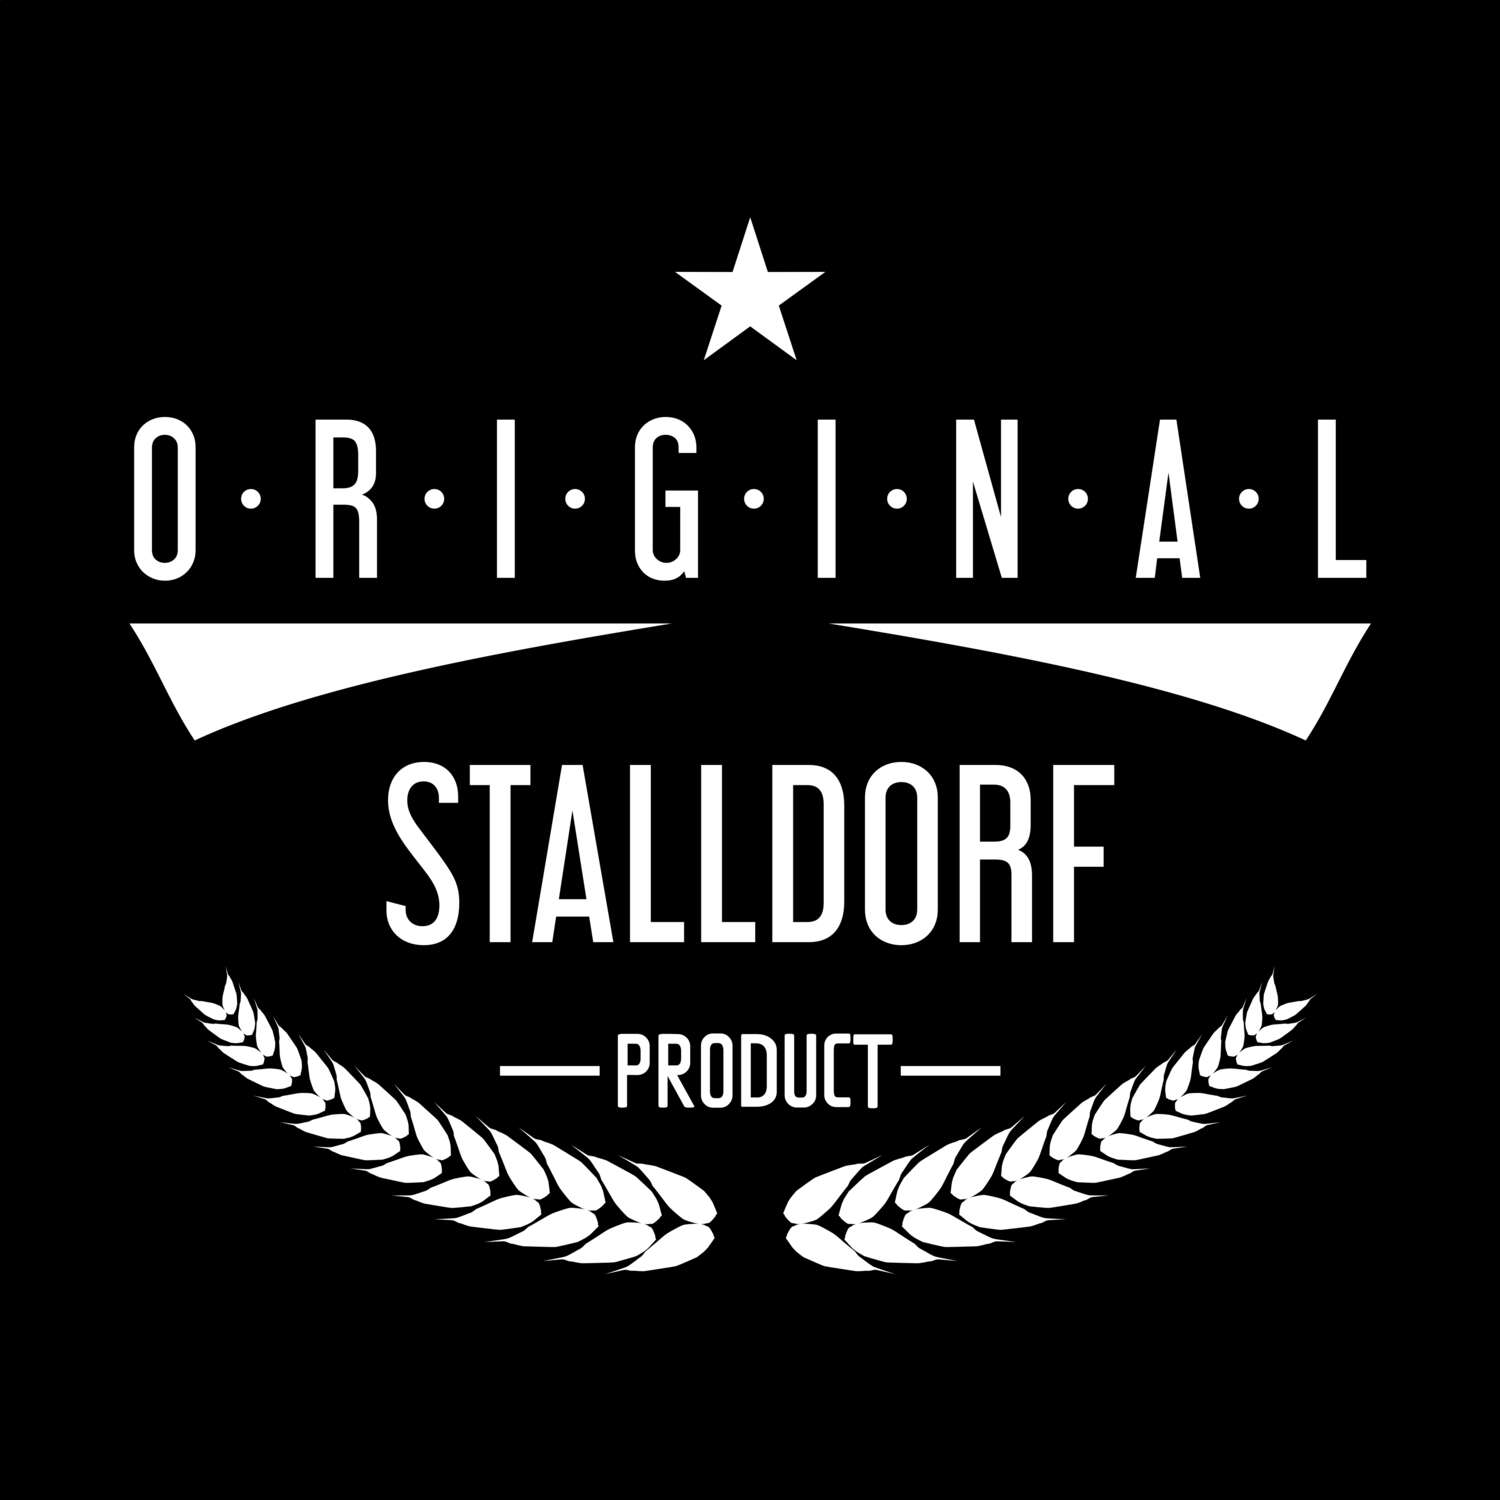 Stalldorf T-Shirt »Original Product«